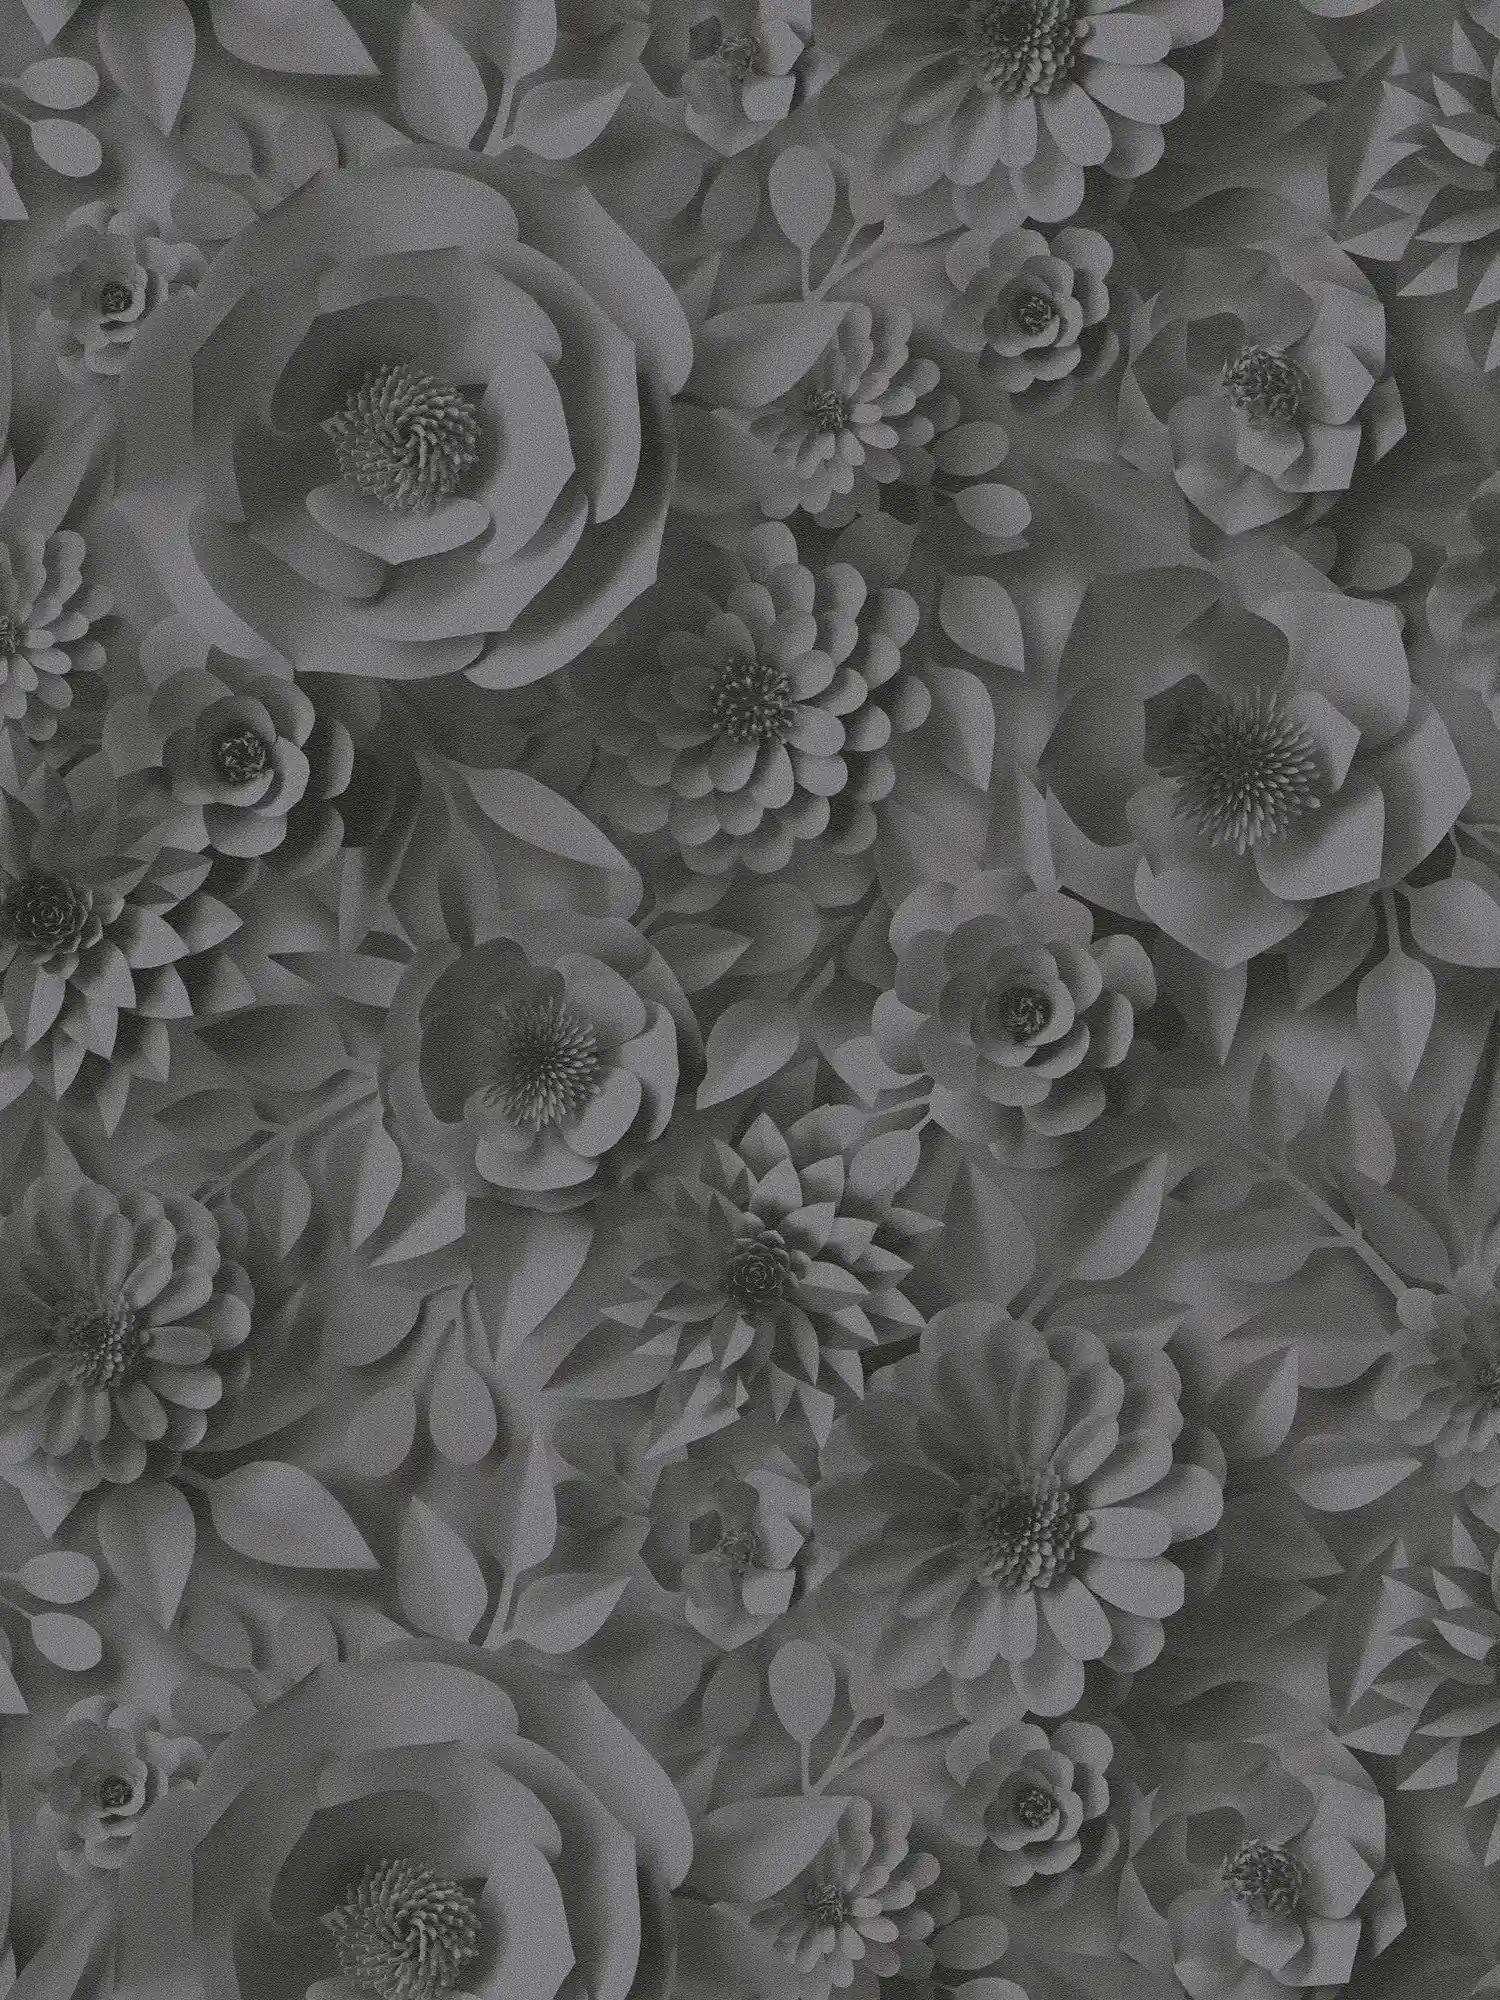 3D papier bloemen behang - Grijs, Zwart
